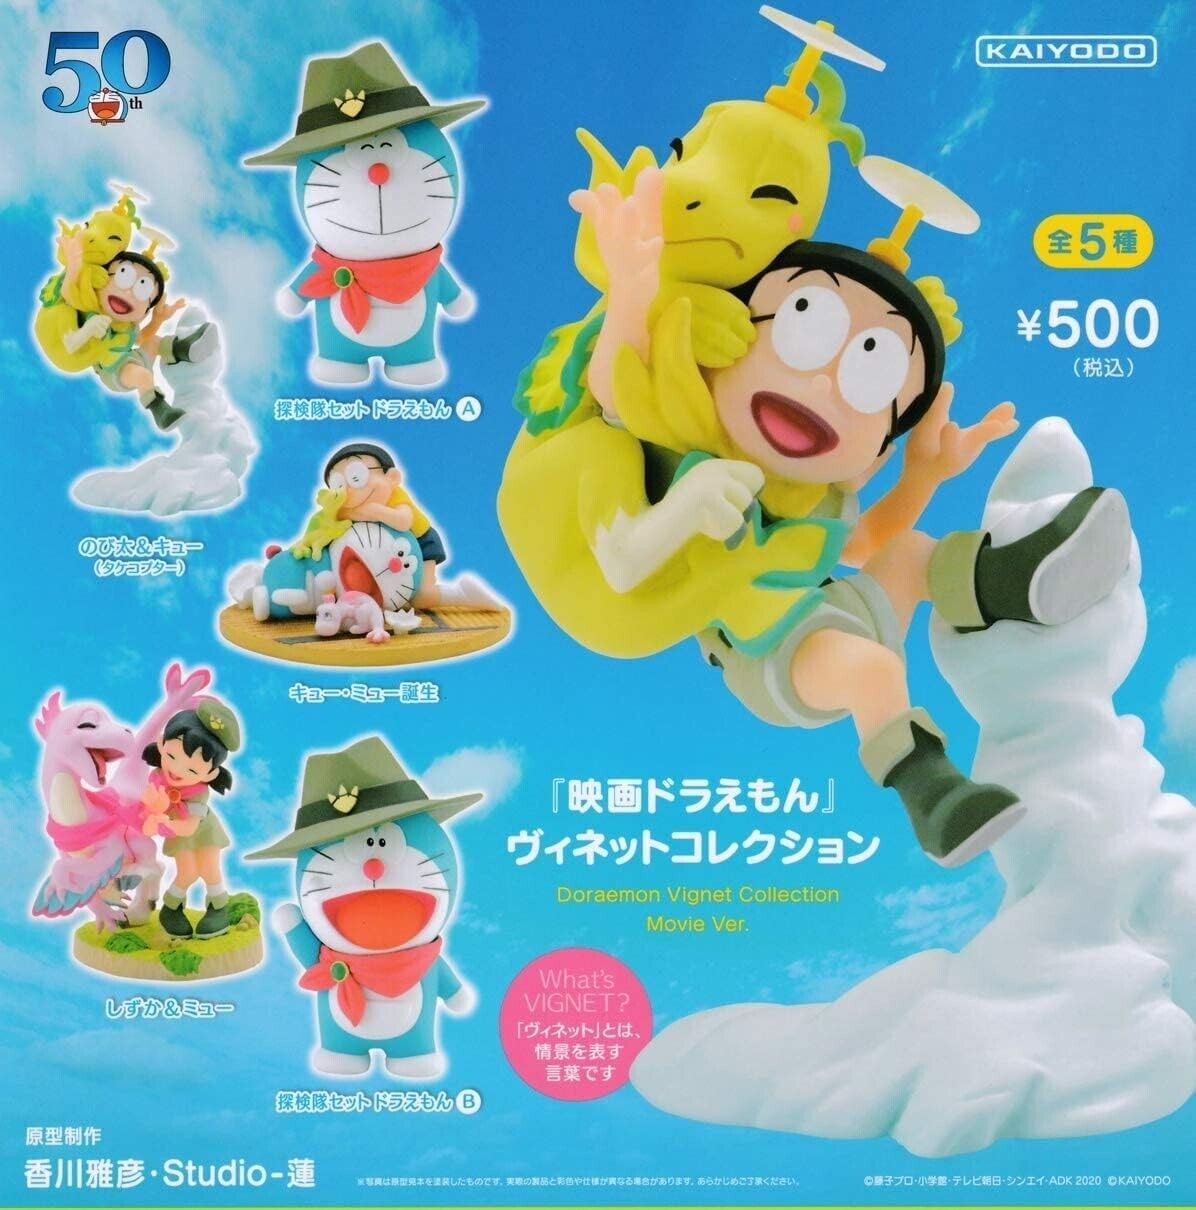 Capsule One Movie Doraemon vignette collection [all 5 sets] Capsule toy Japan